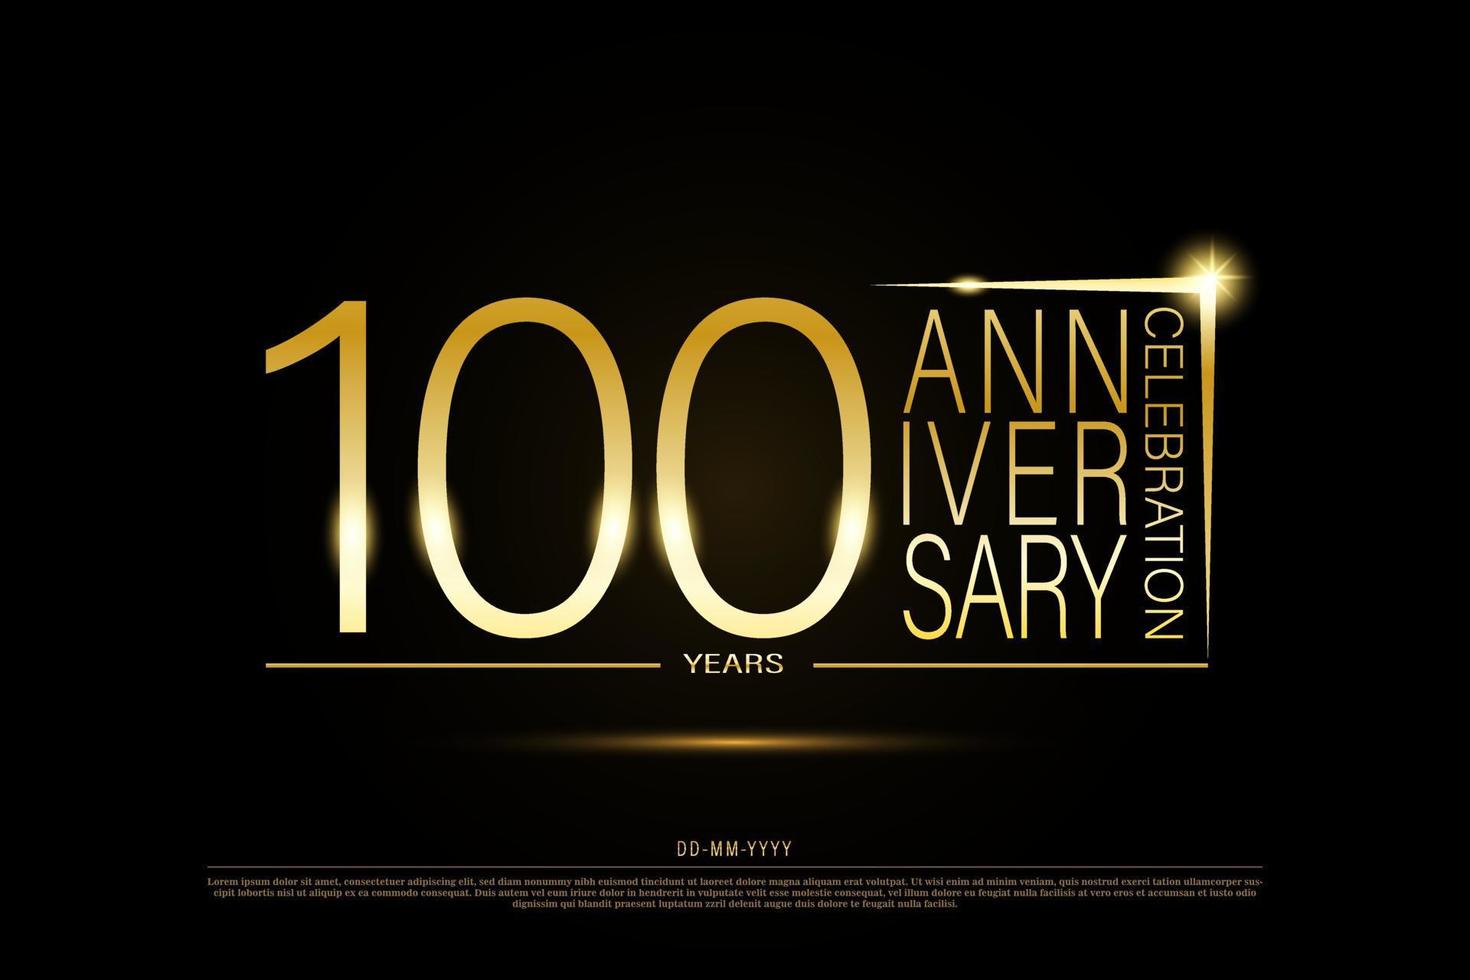 100 years golden anniversary gold logo on black background, vector design for celebration.